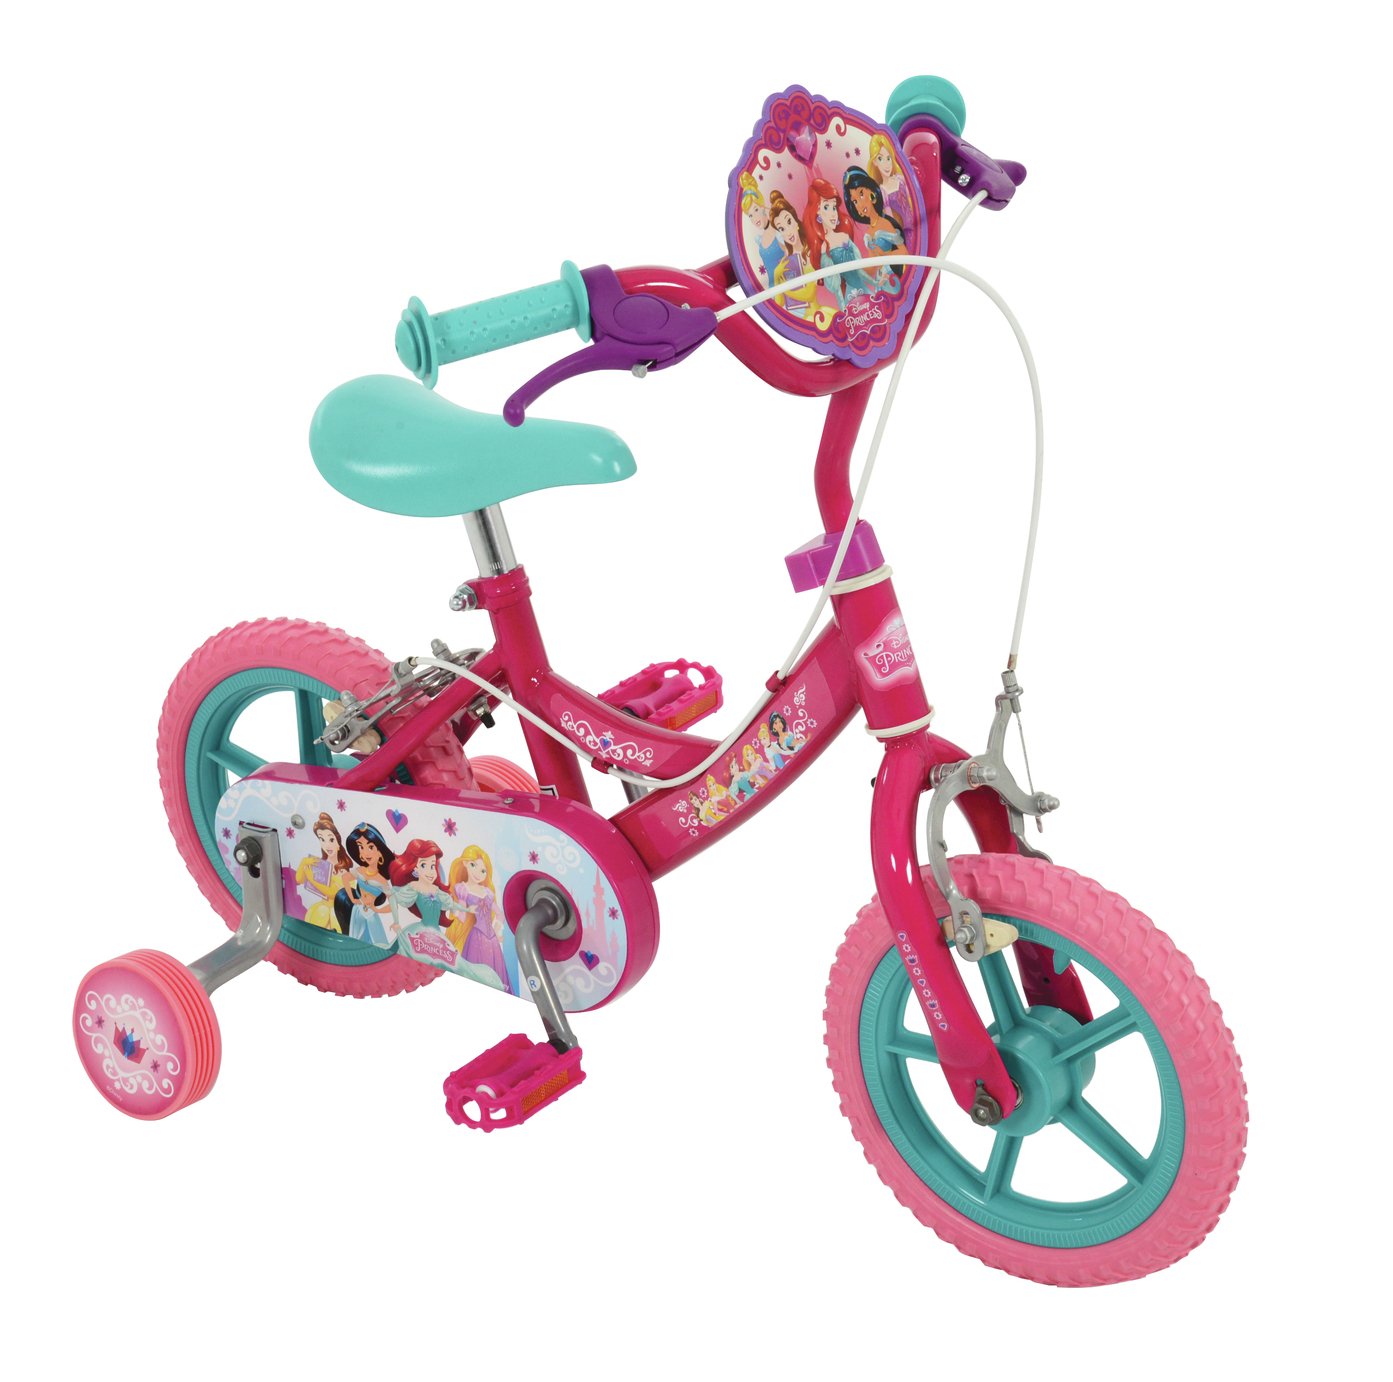 Disney Princess 12 inch Wheel Size Kids Bike